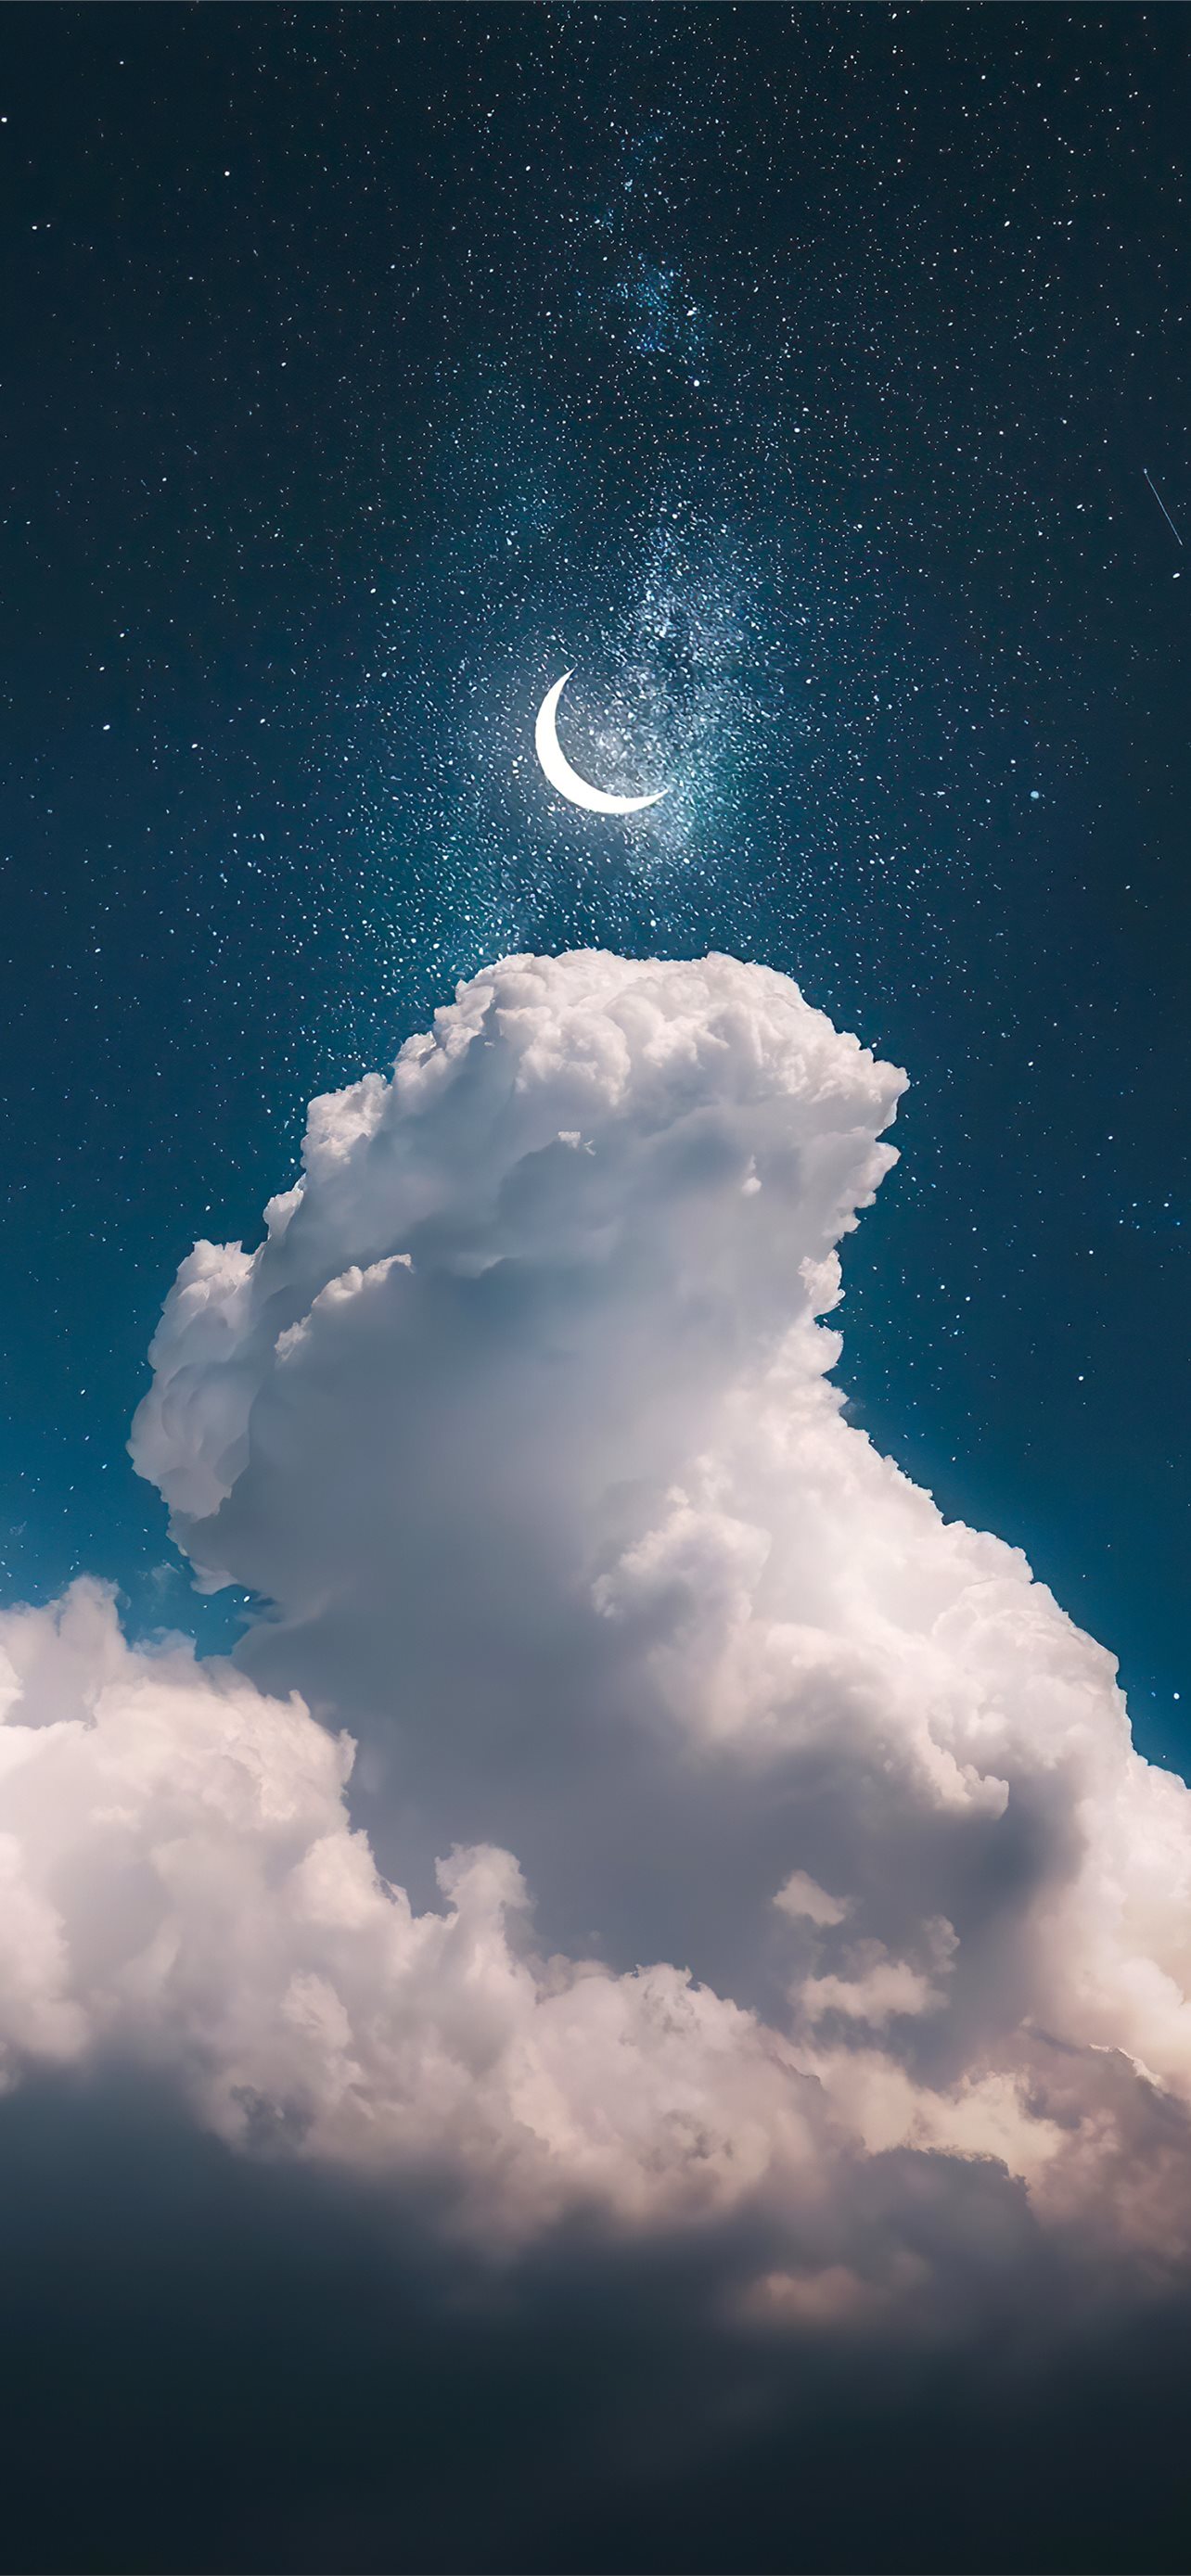 crescent moon iPhone wallpaper 